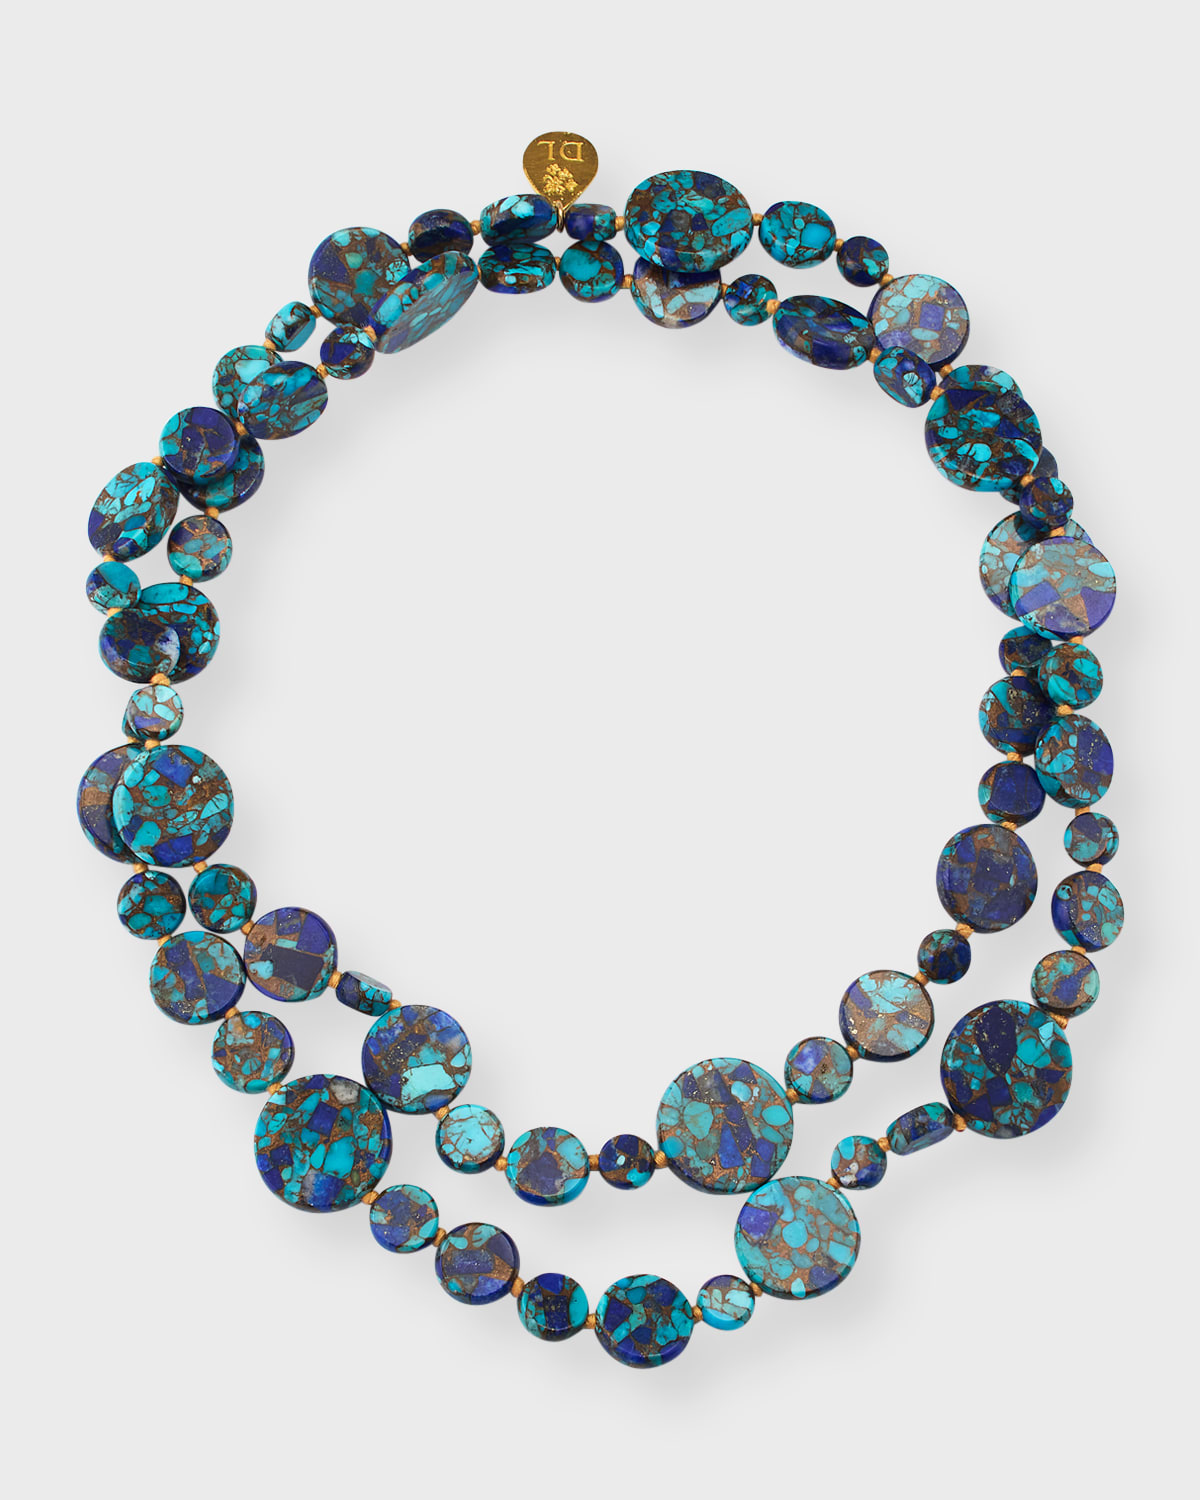 Devon Leigh Long Blue Coin Necklace, 36"l